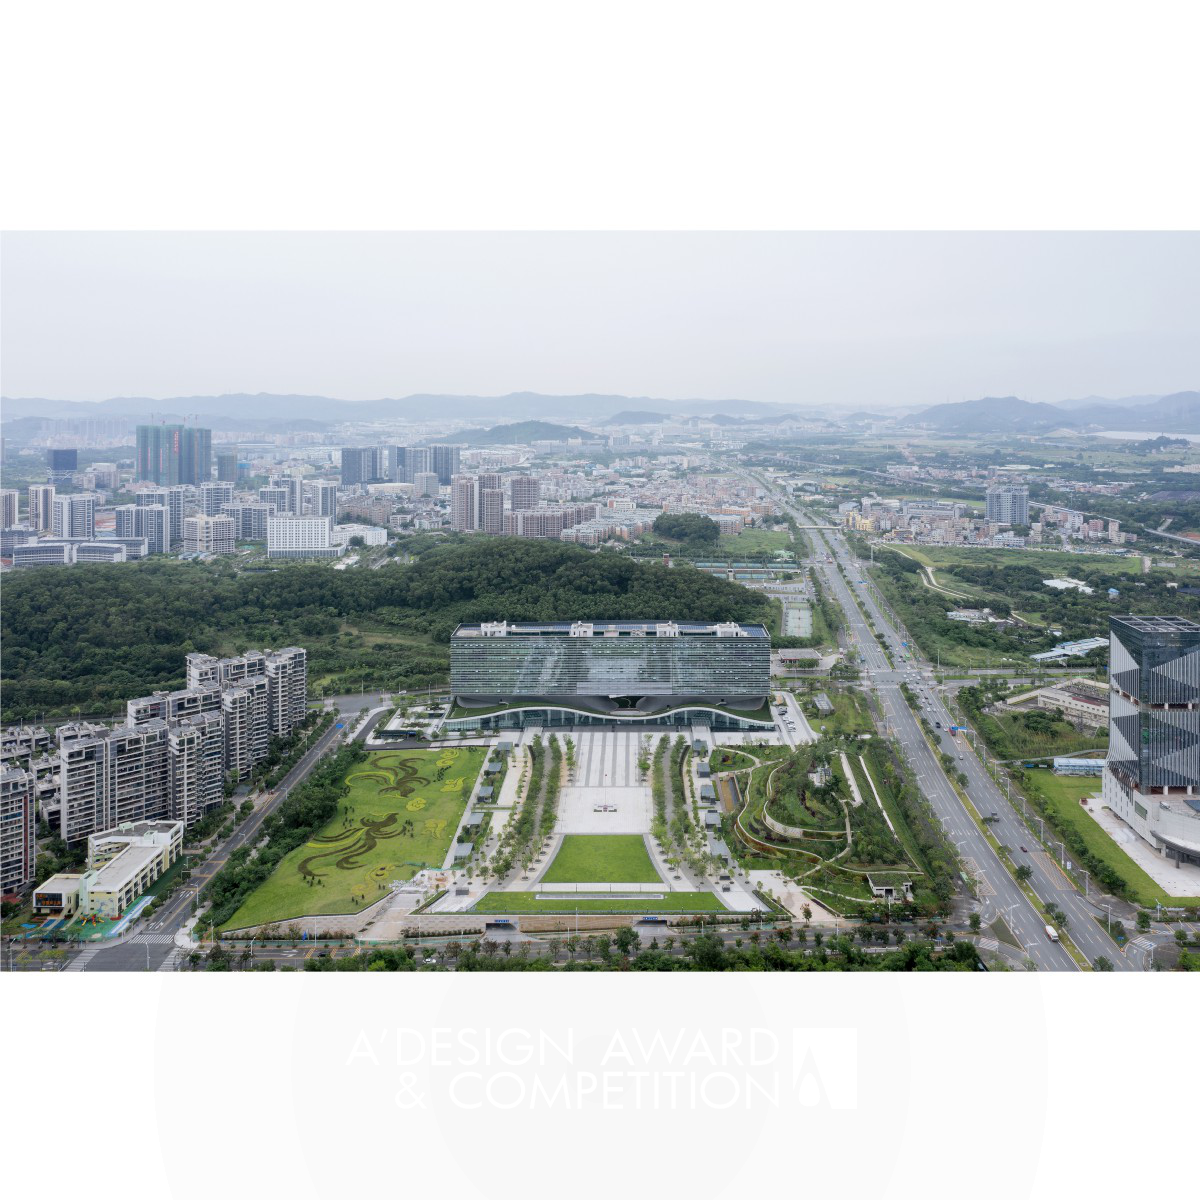 Guangming Public Service Platform by Zhubo Design Co., Ltd. Platinum Architecture, Building and Structure Design Award Winner 2021 